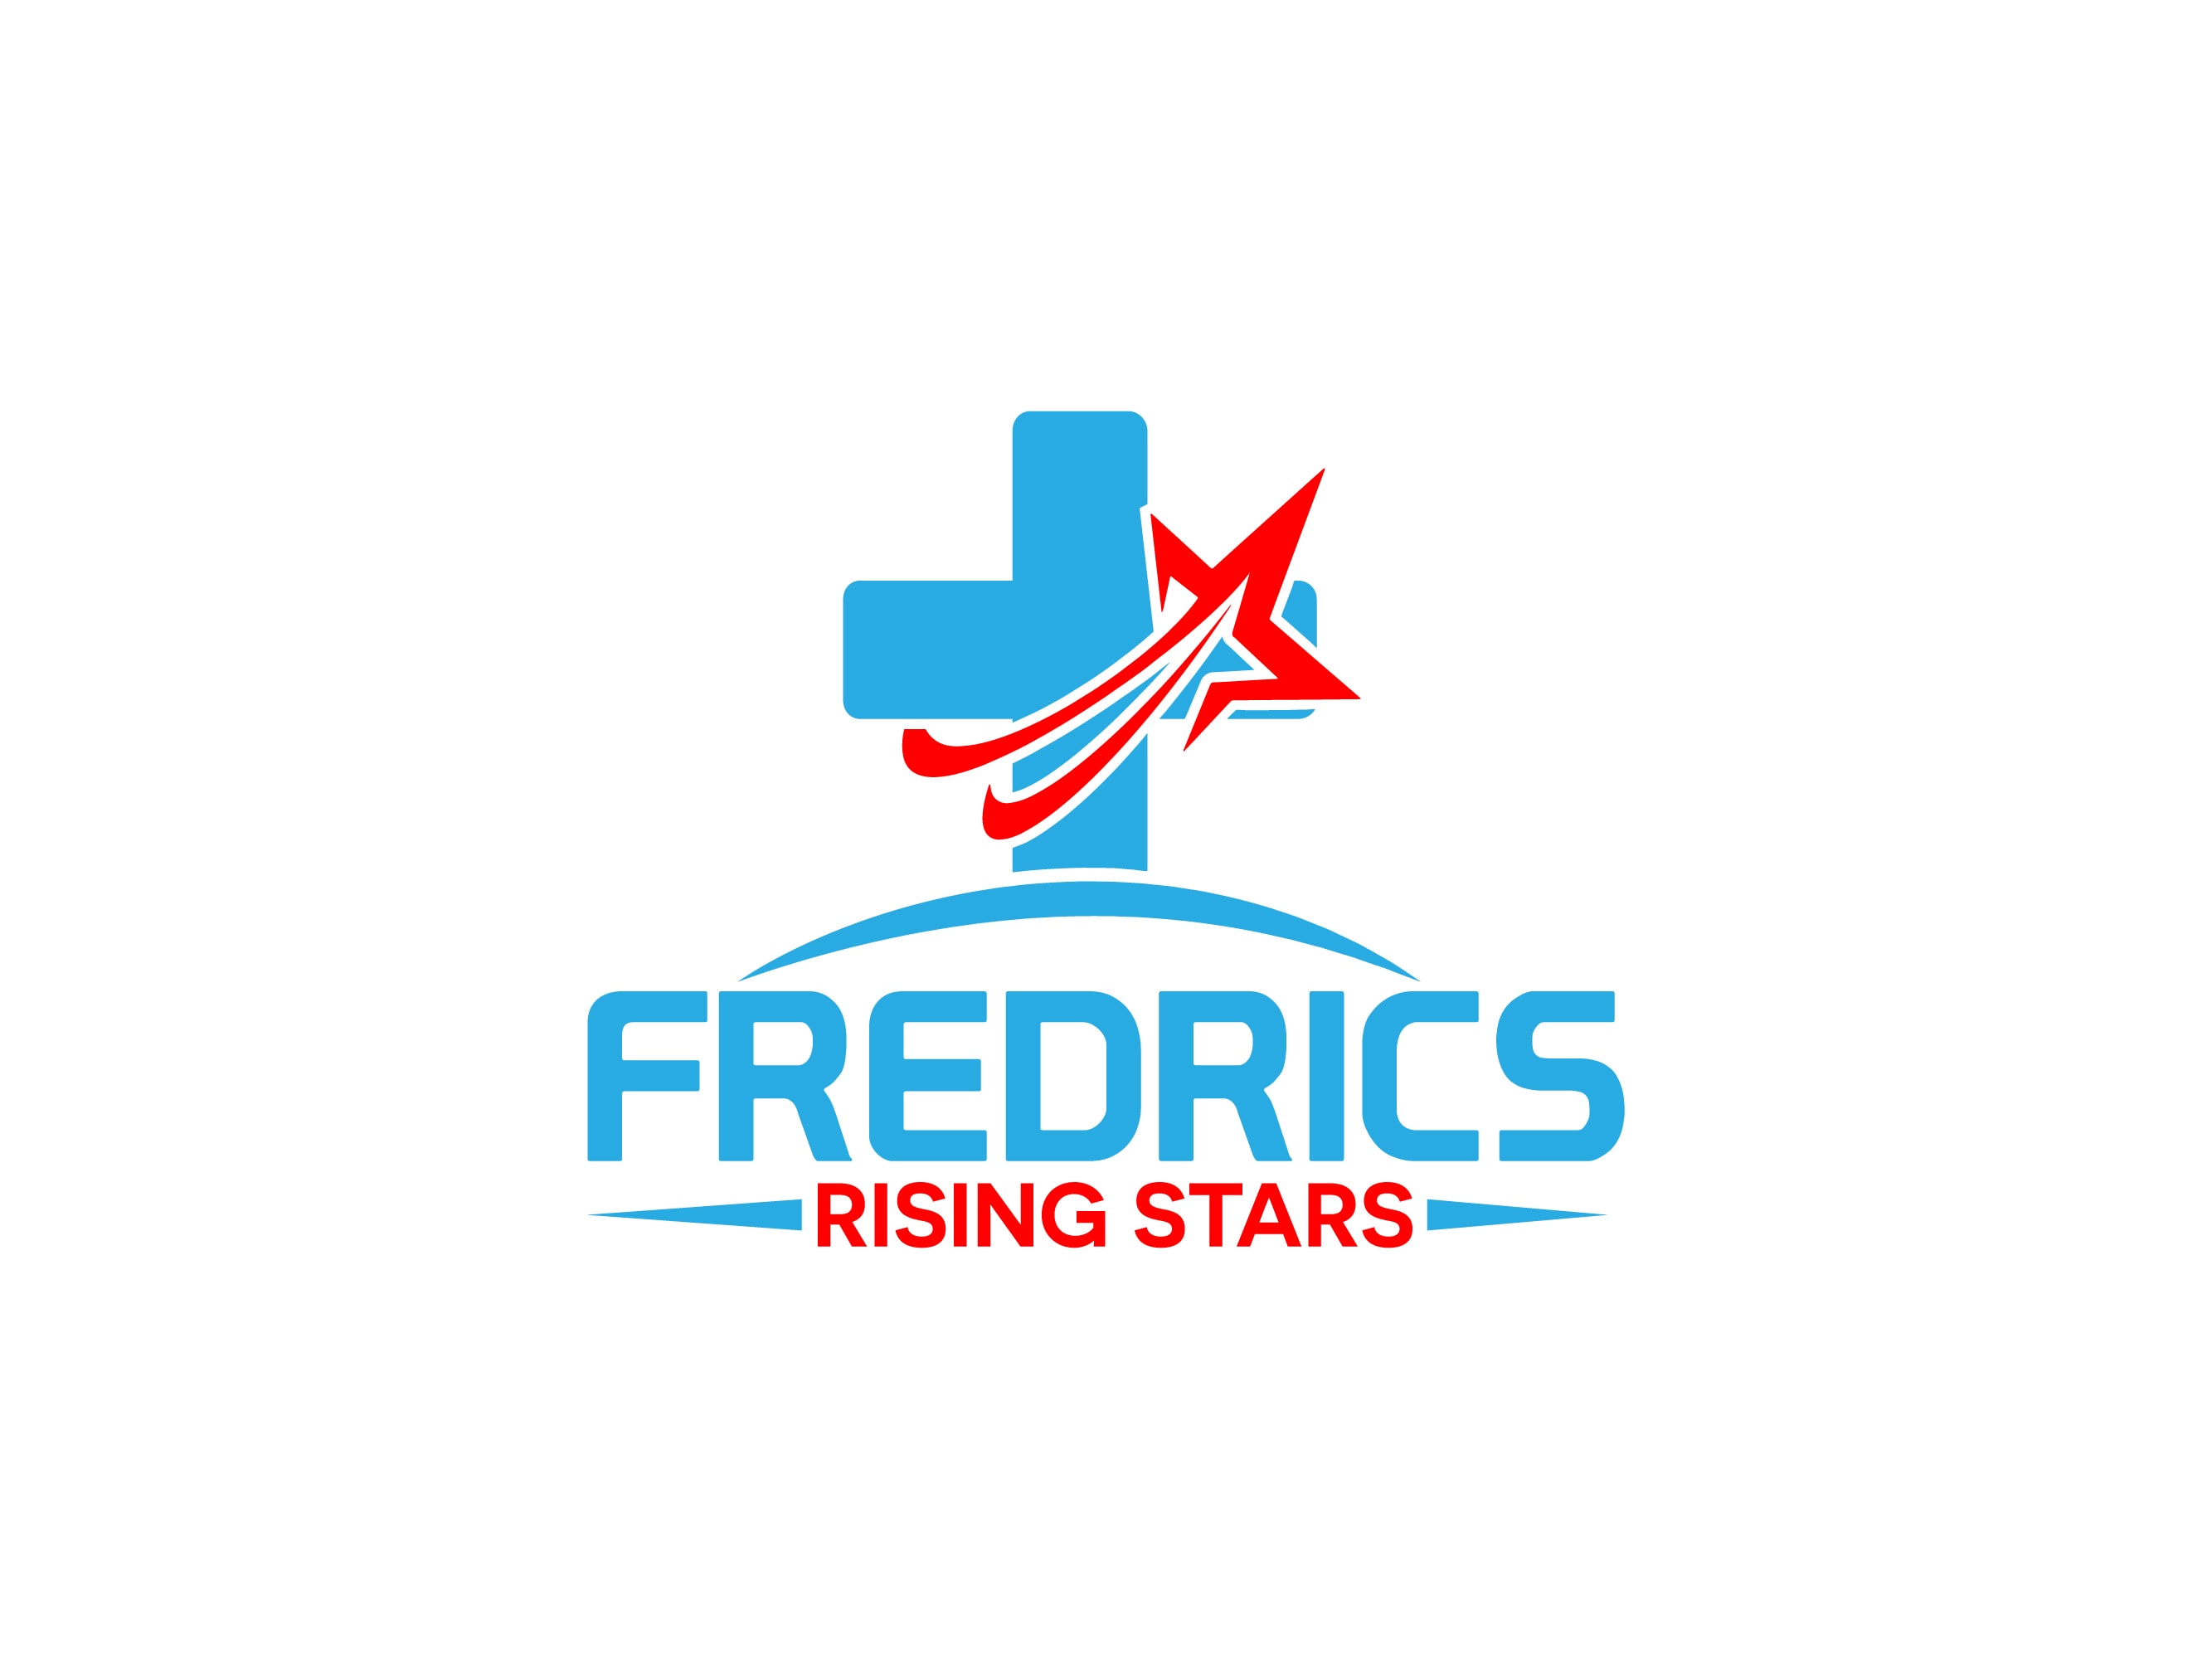 Fredrics Rising Stars